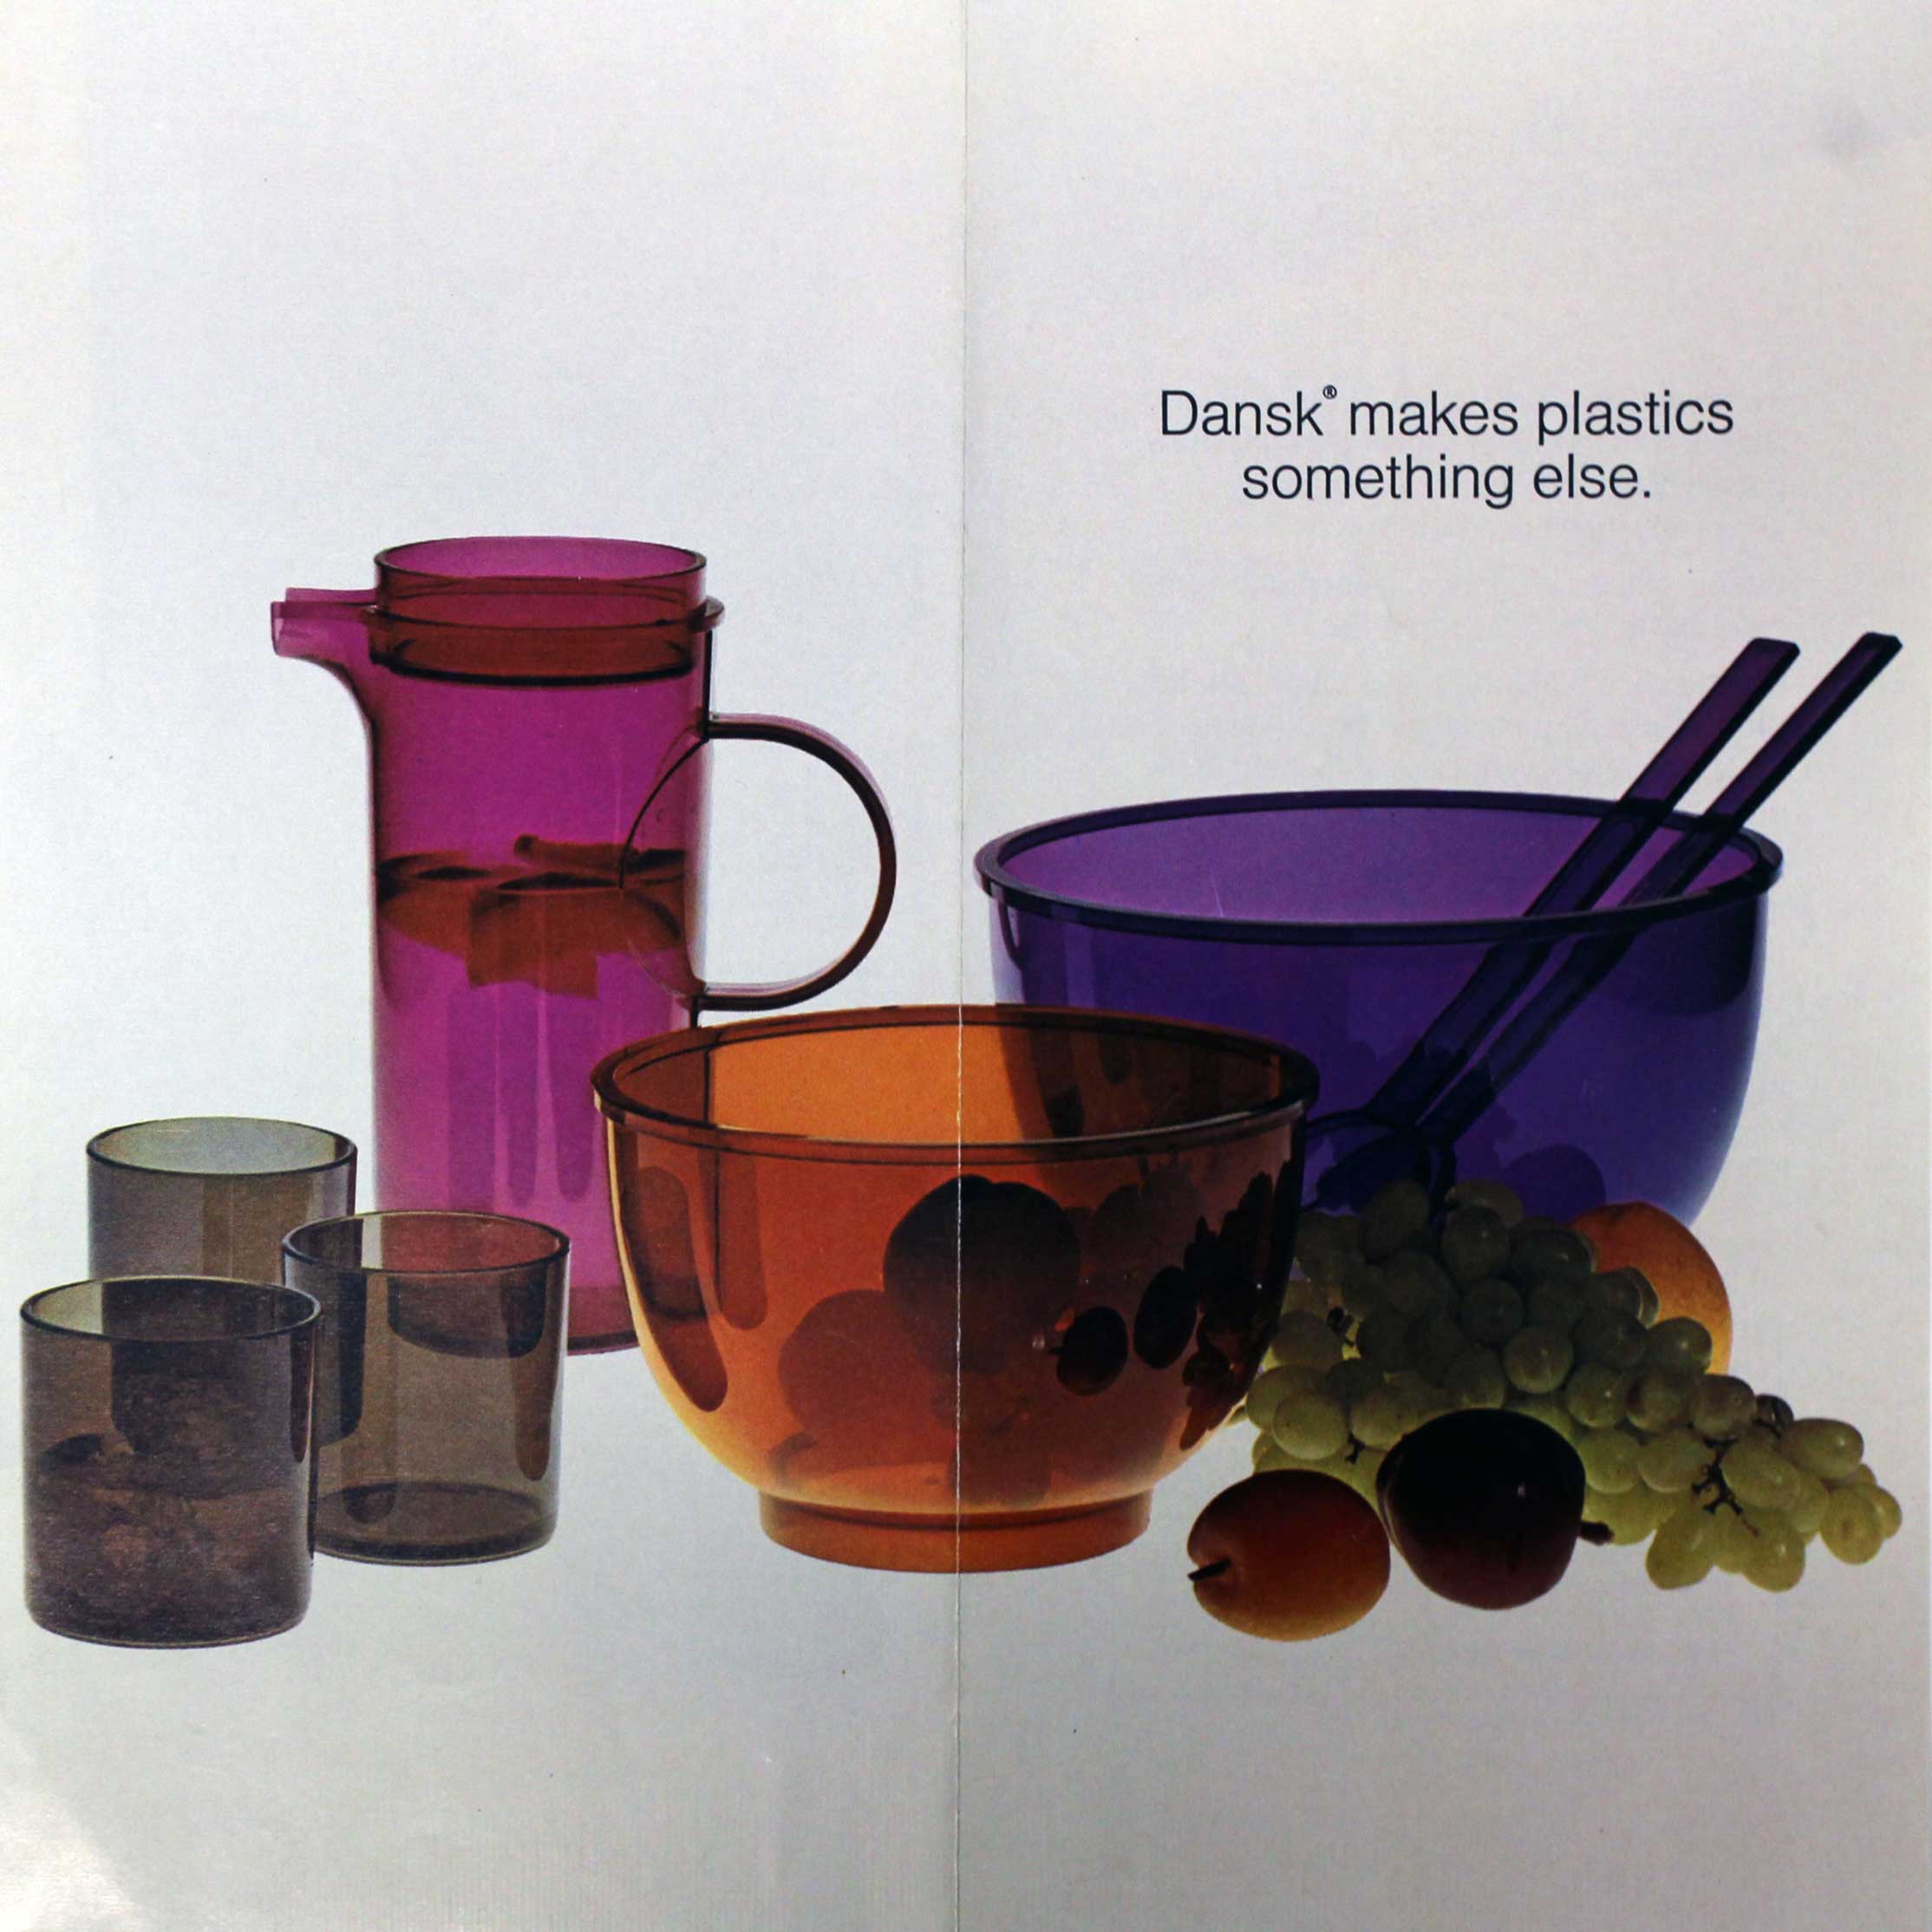 Dansk Gourmet Designs Ltd, annons, Plastic medley, 1971.